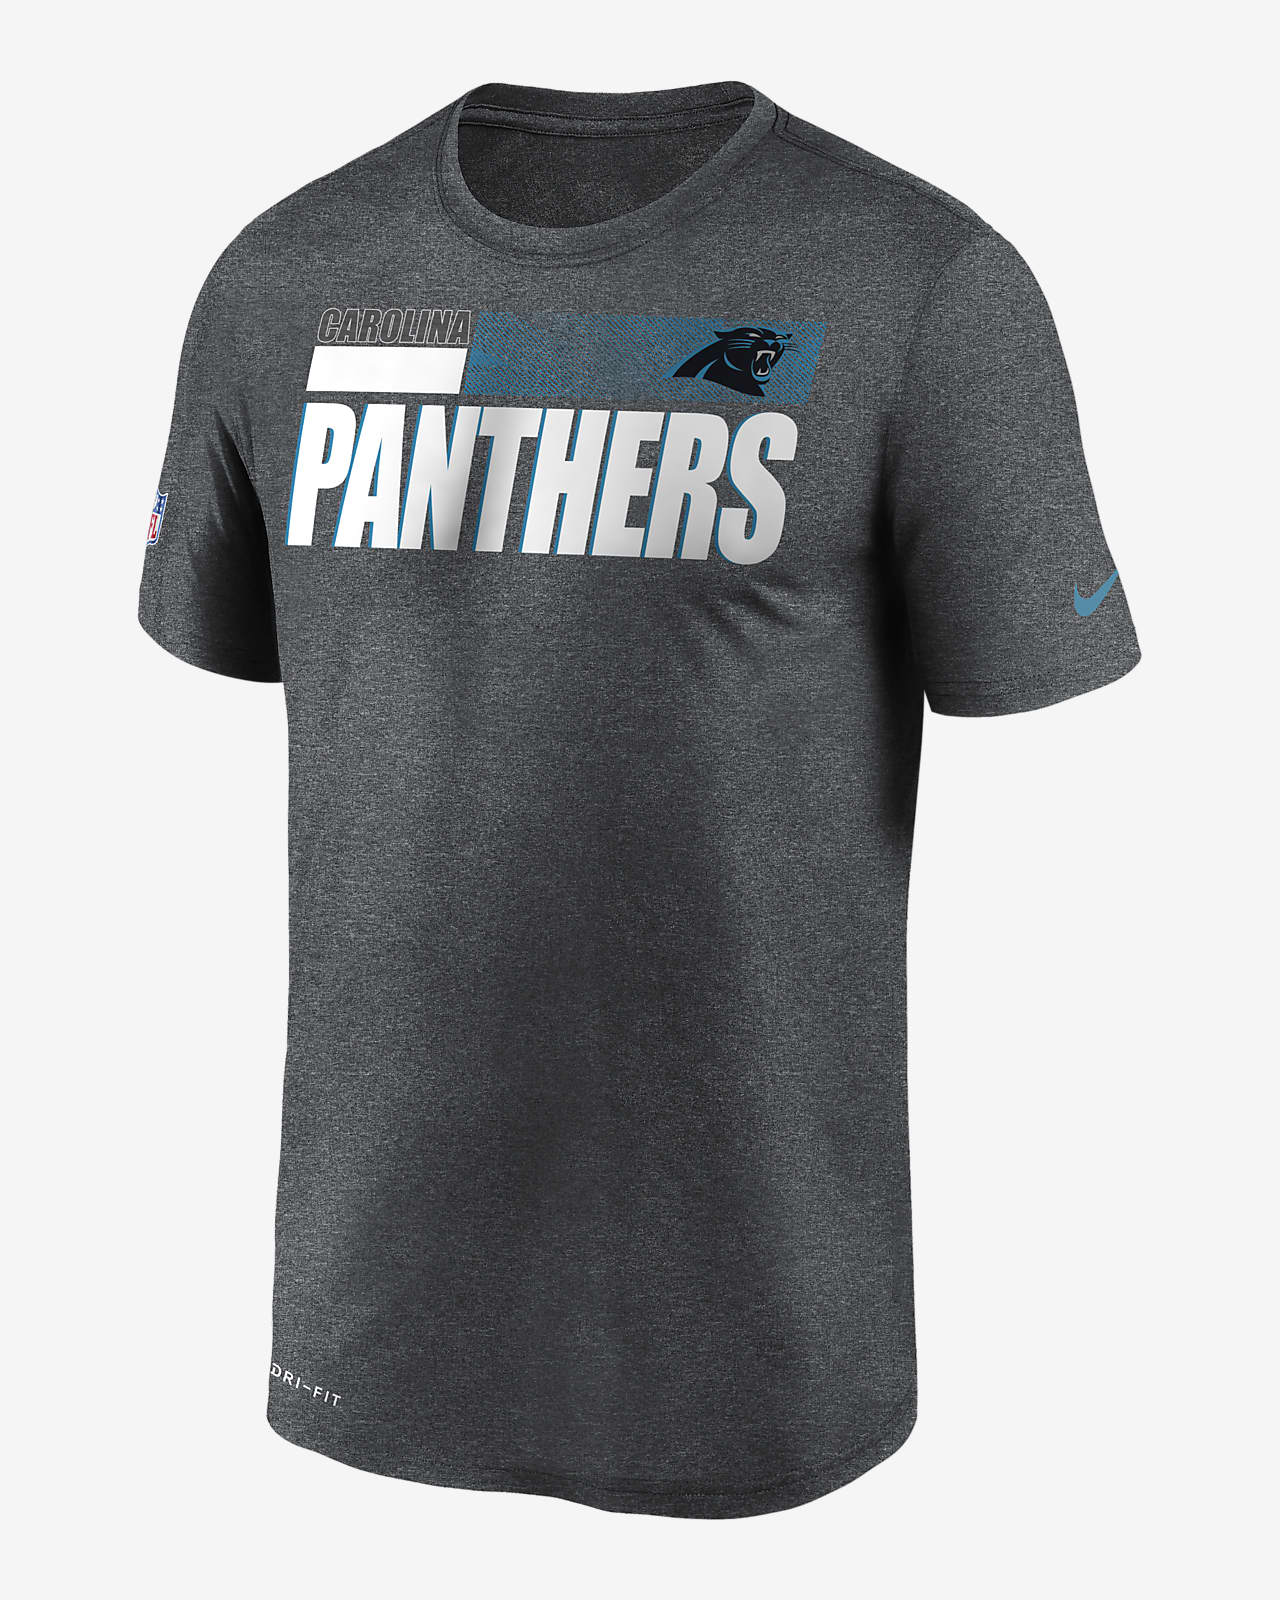 Nike Dri-FIT Team Name Legend Sideline (NFL Carolina Panthers) Men's T-Shirt.  Nike SI